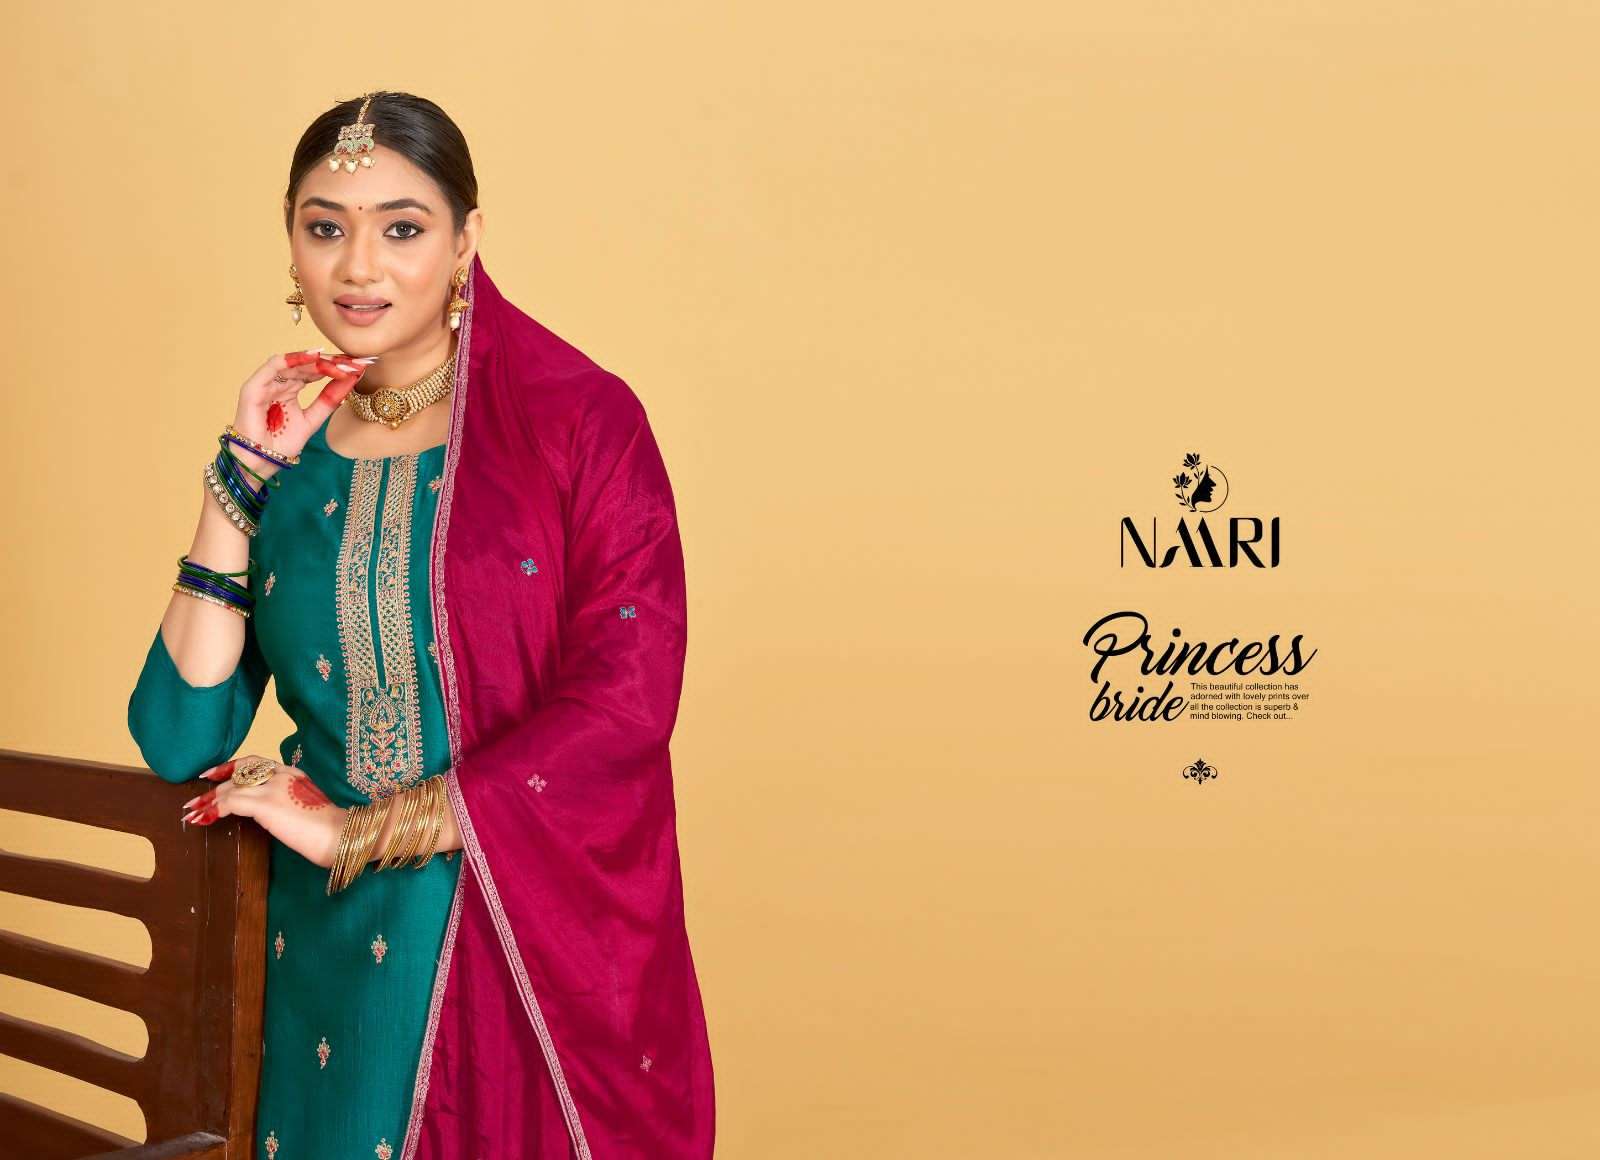 naari kaash silk 9901-9904 series designer pakistani wedding wear wholesaler surat gujarat